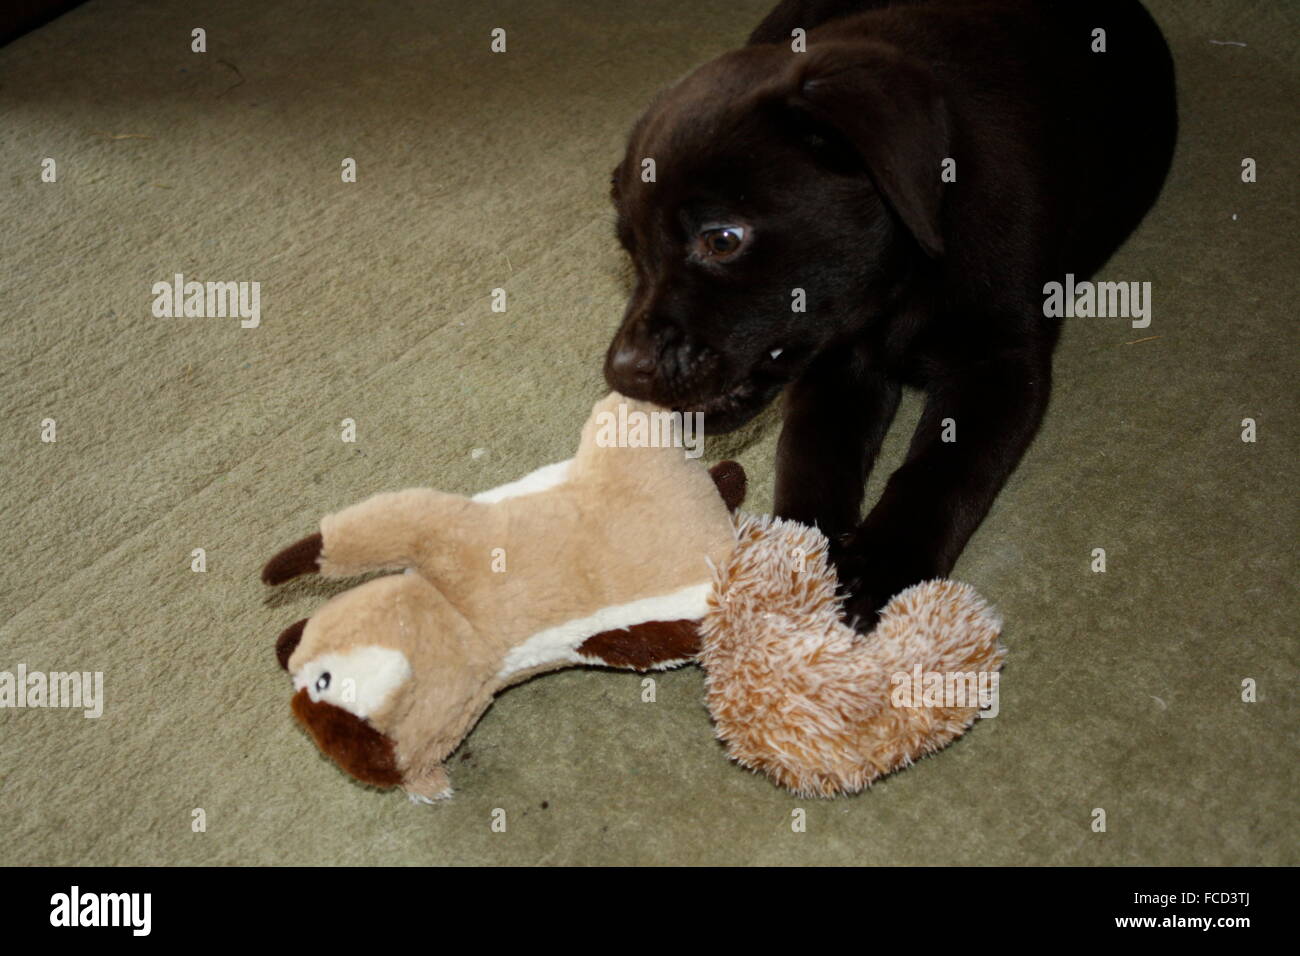 Cute Dog Biting A Stuffed Toy Stock Photo